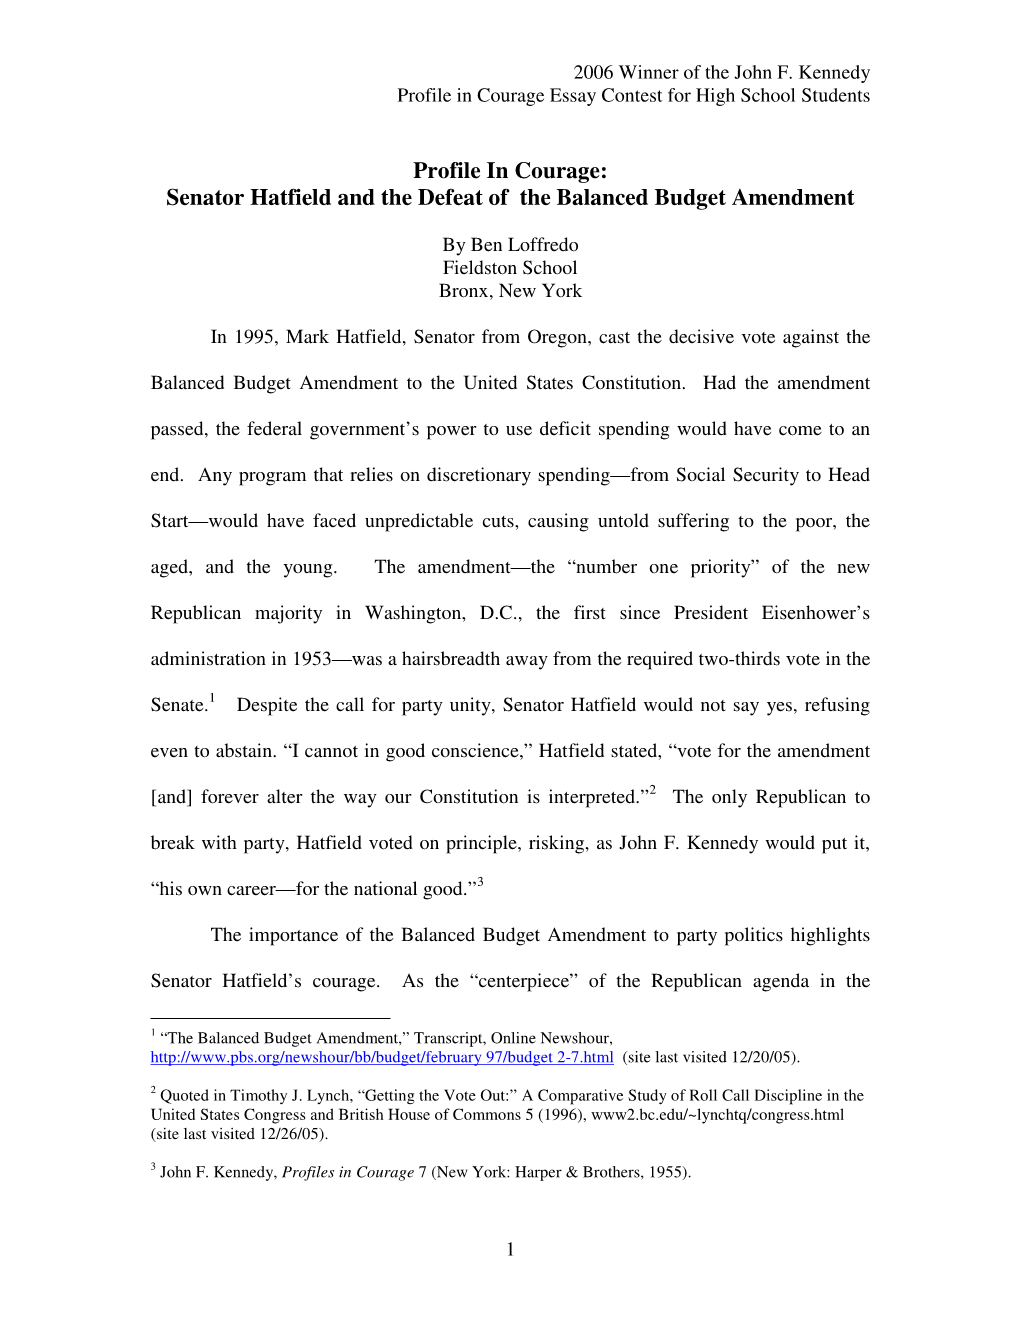 Senator Hatfield and the Defeat of the Balanced Budget Amendment